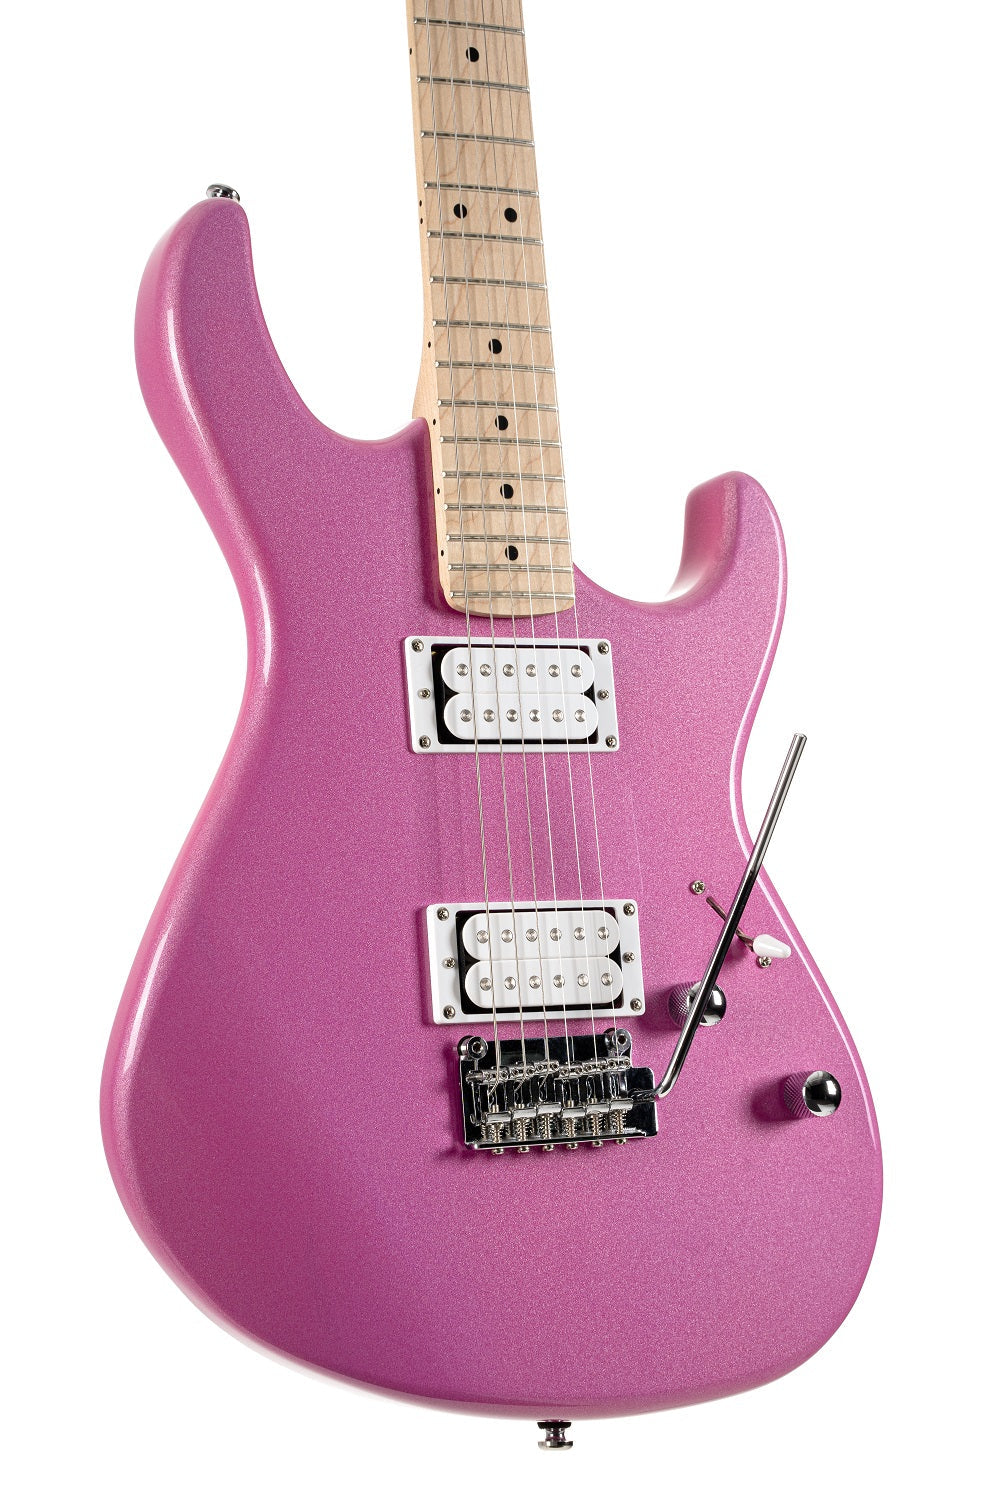 Cort G250 Spectrum Metallic Purple, Electric Guitar for sale at Richards Guitars.